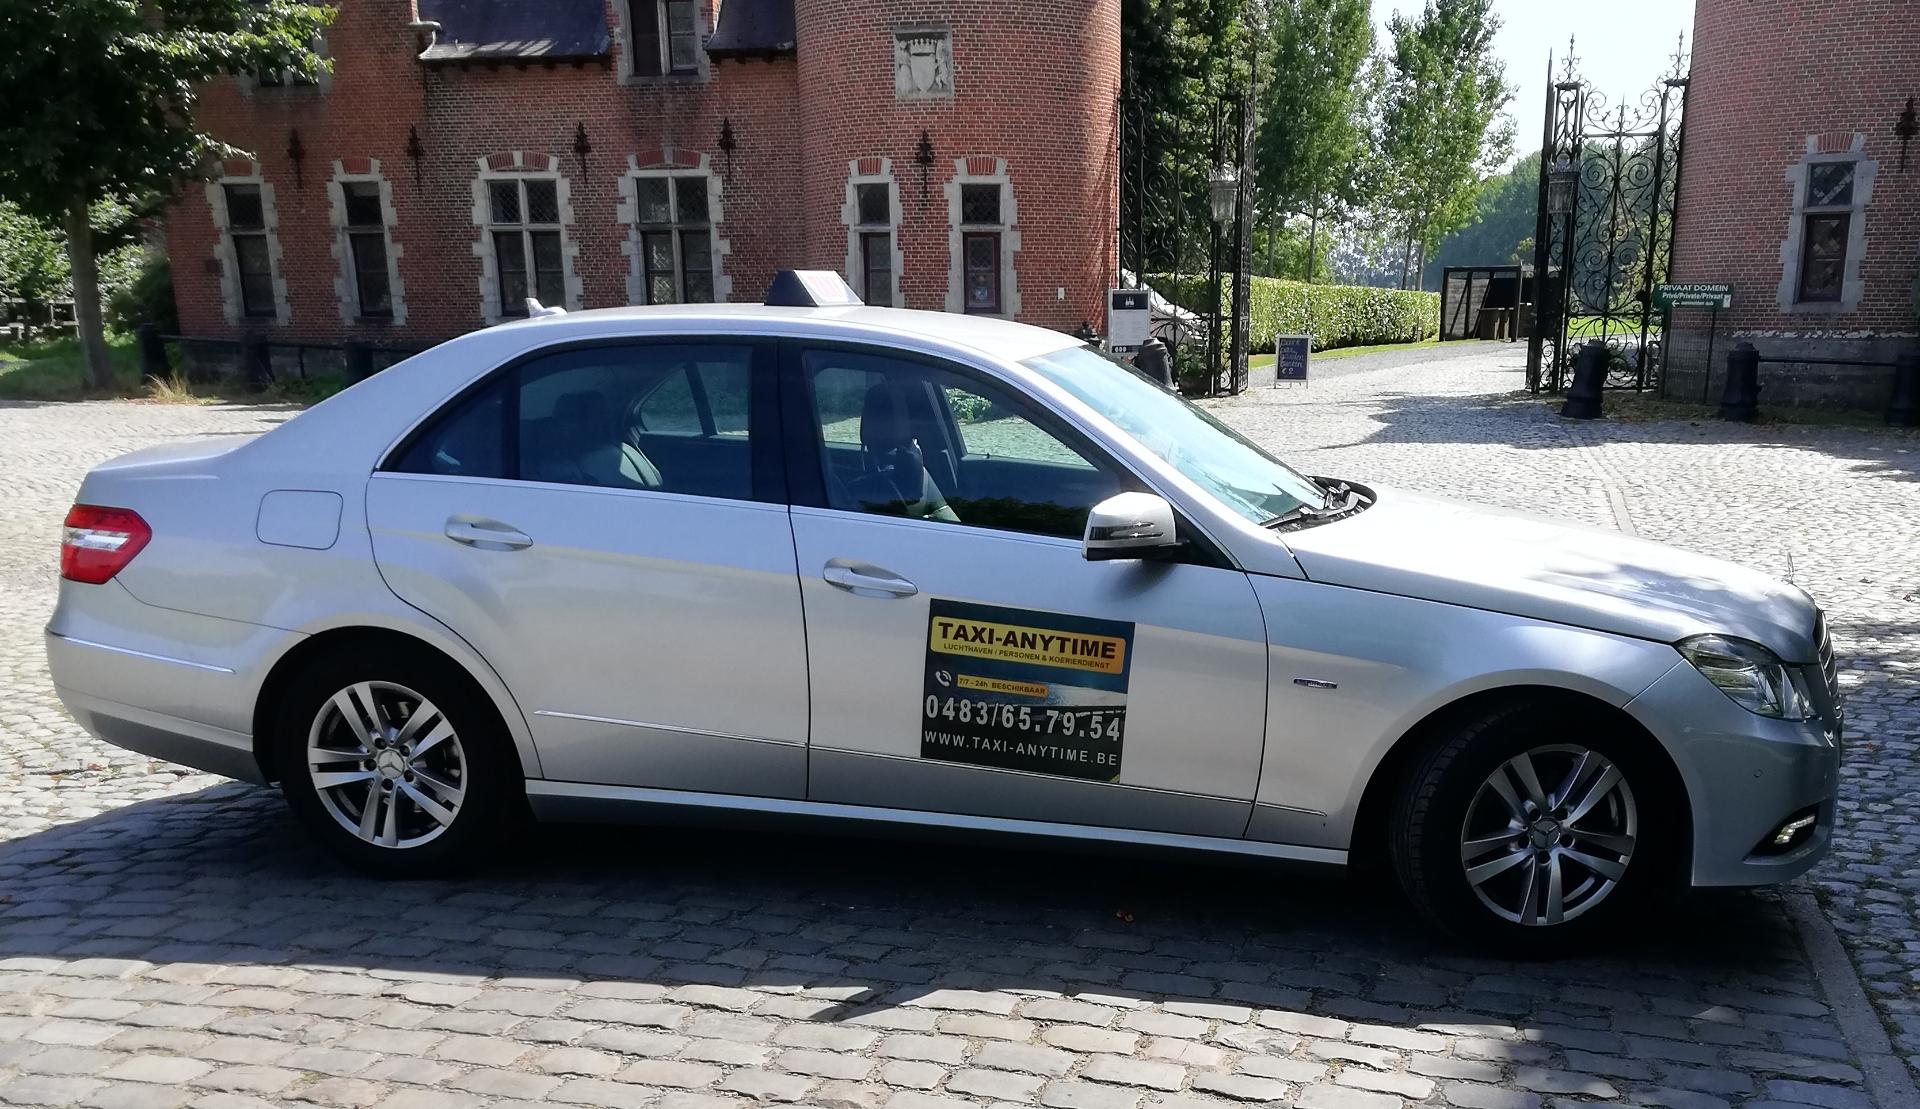 taxibedrijven Sint-Agatha-Berchem Taxi-Anytime